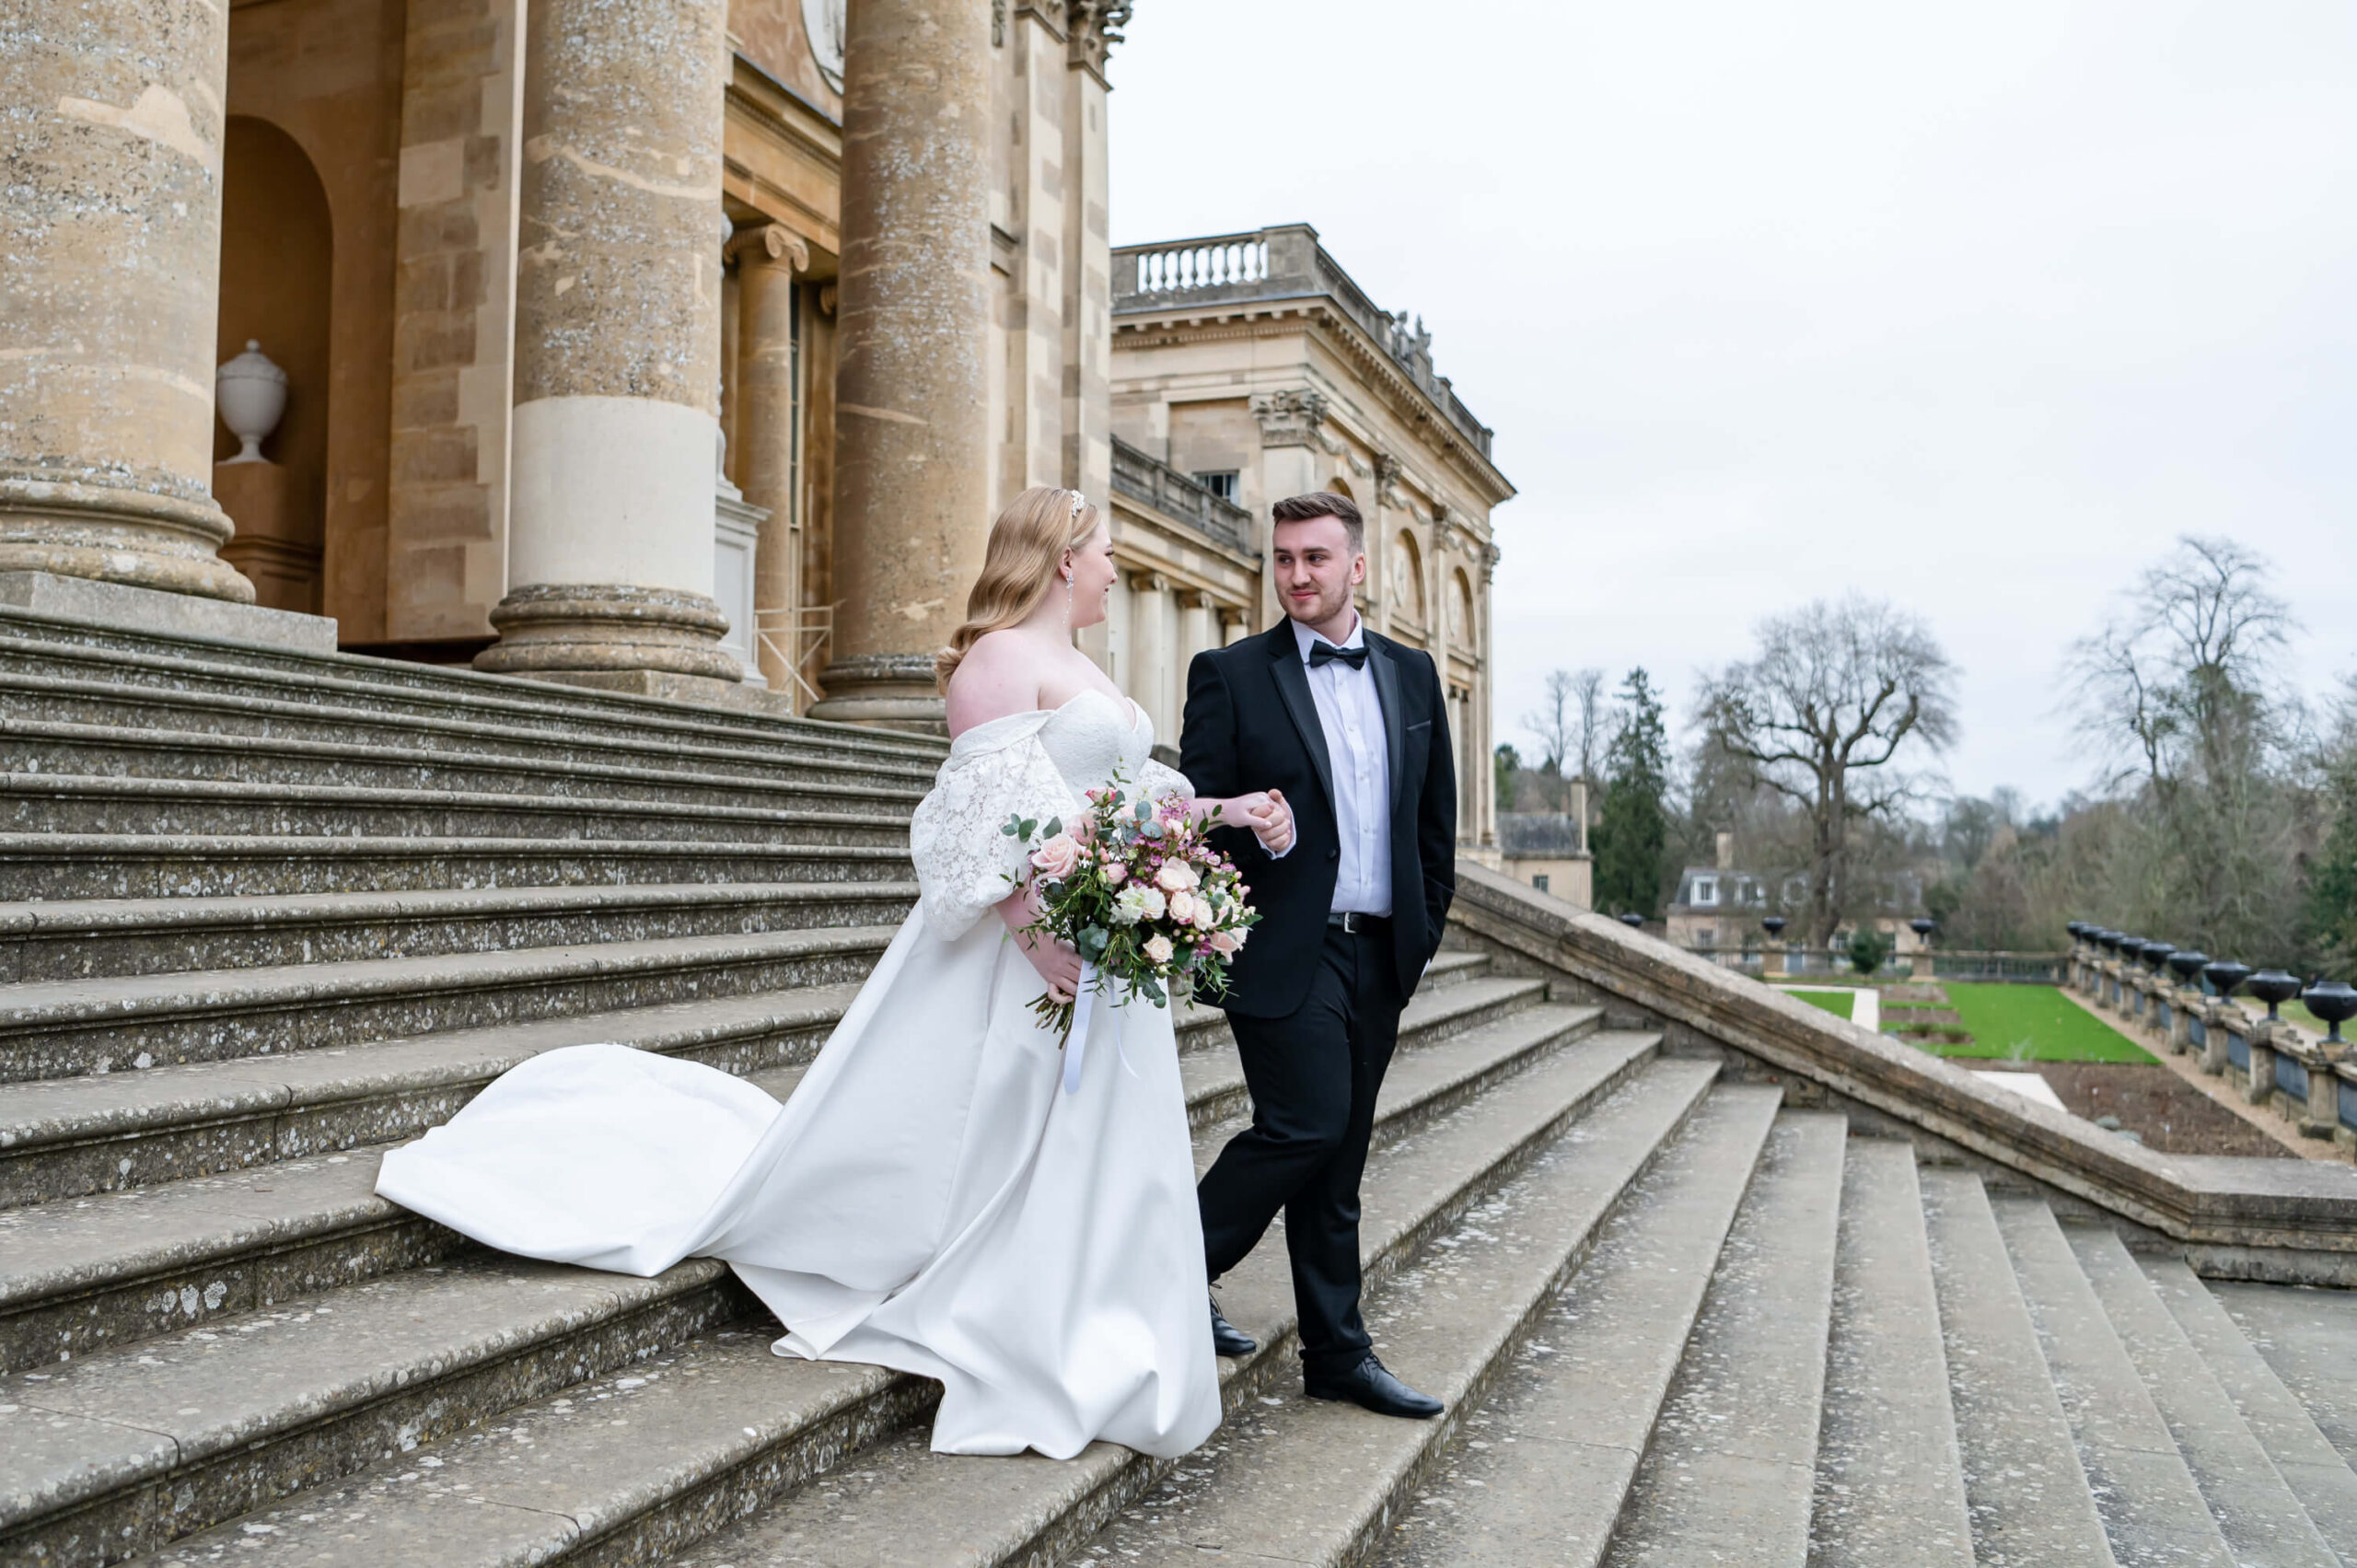 Stowe House Wedding Venue - Buckinghamshire UK wedding photographer Chloe Bolam - couple portraits walking down the stairs